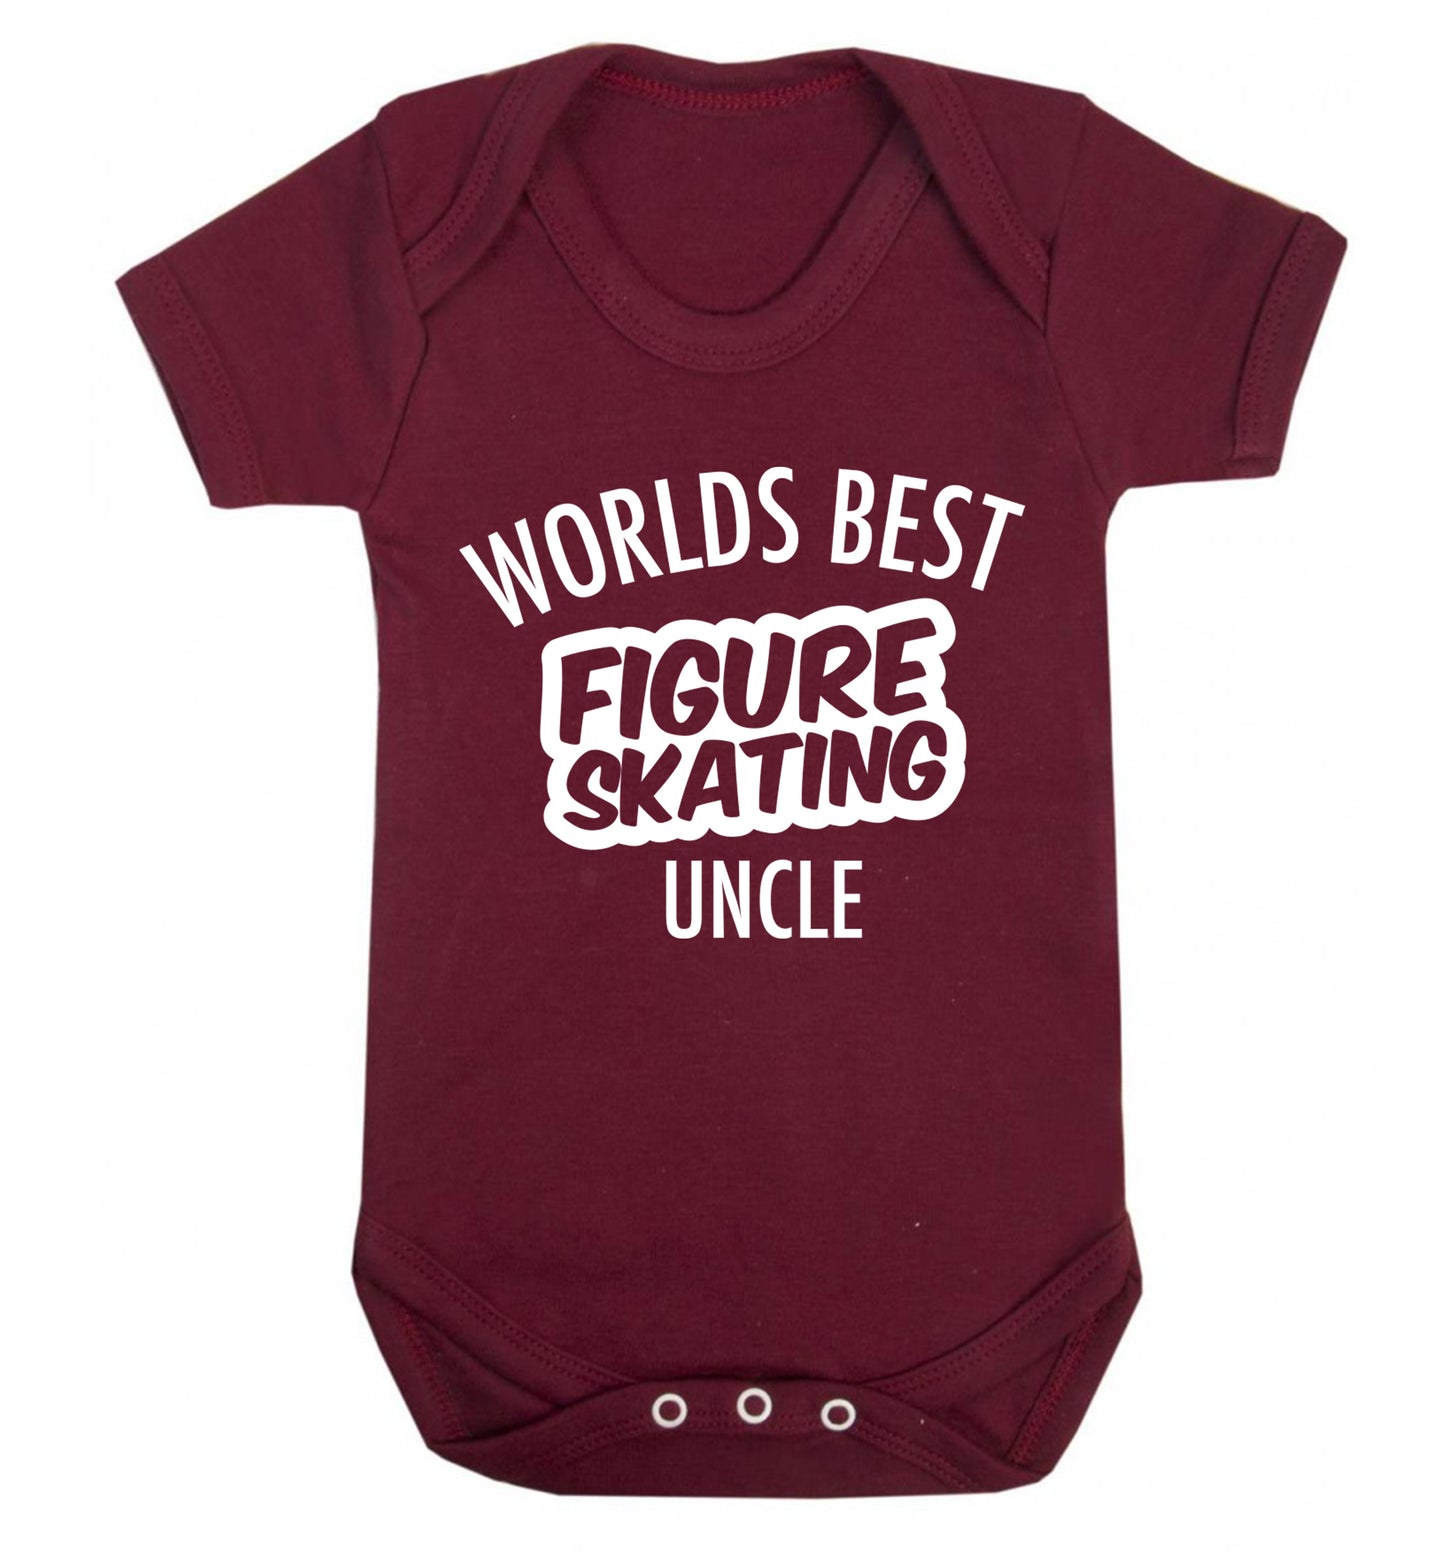 Worlds best figure skating uncle Baby Vest maroon 18-24 months